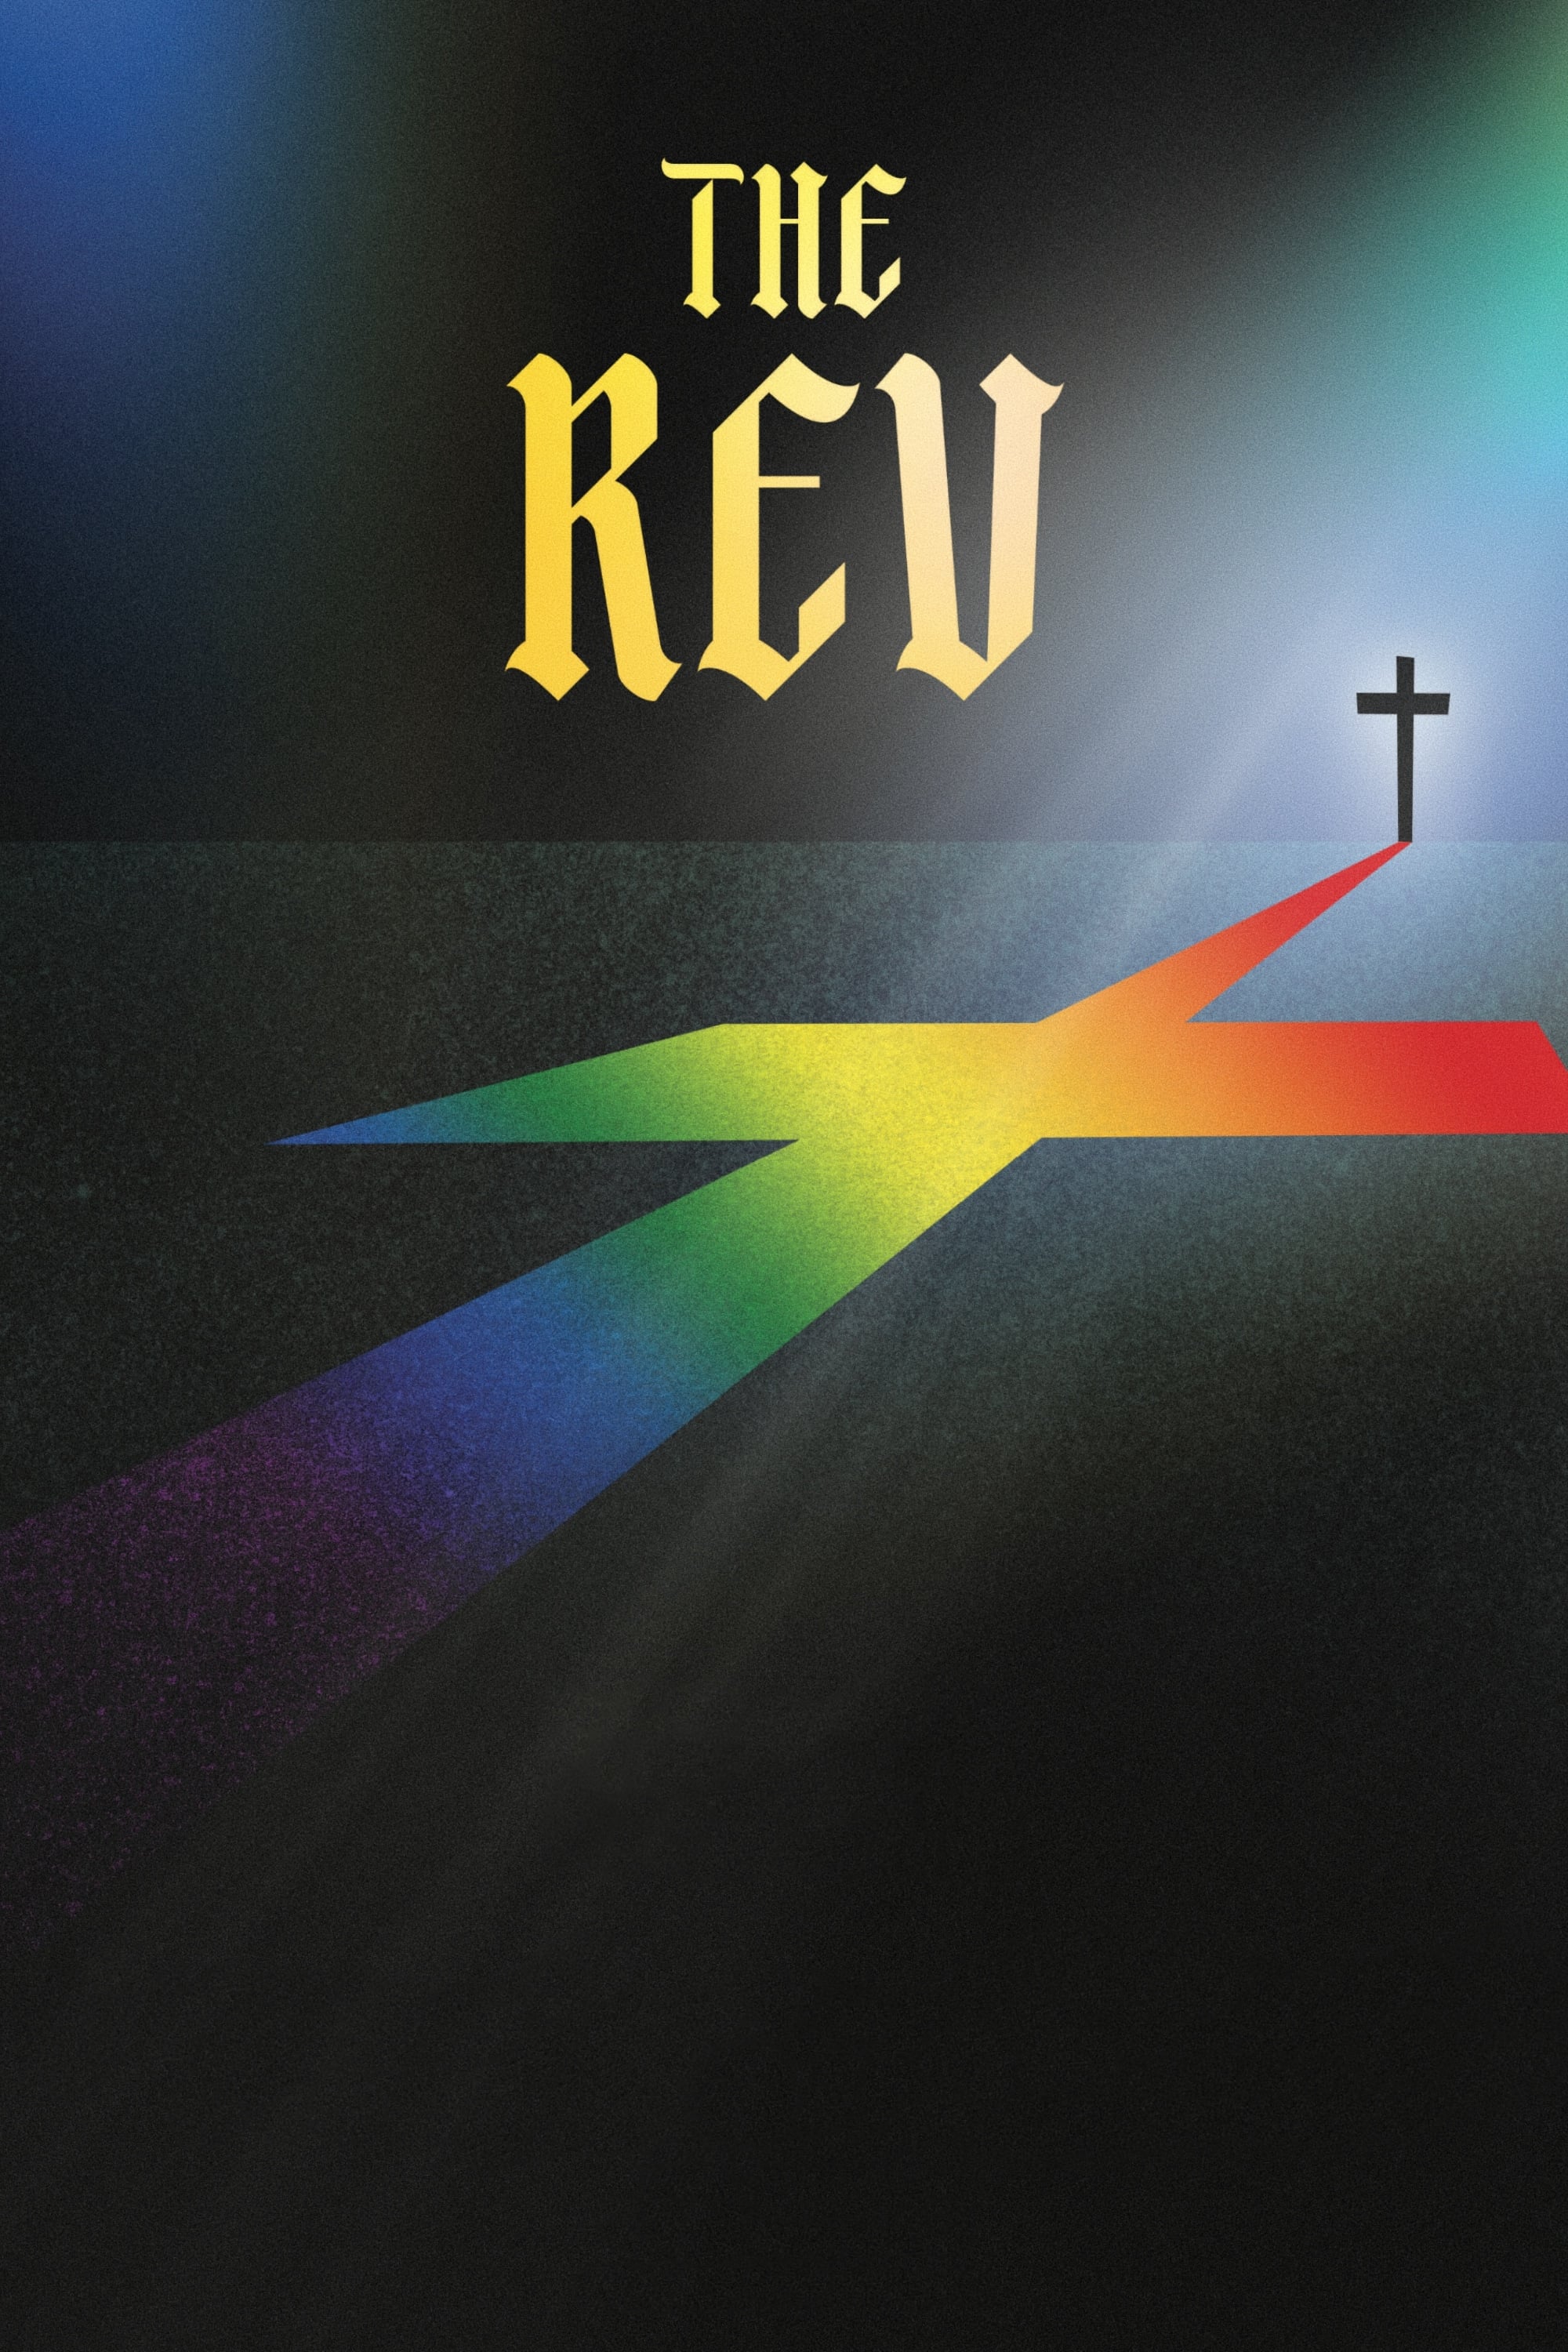 The Rev